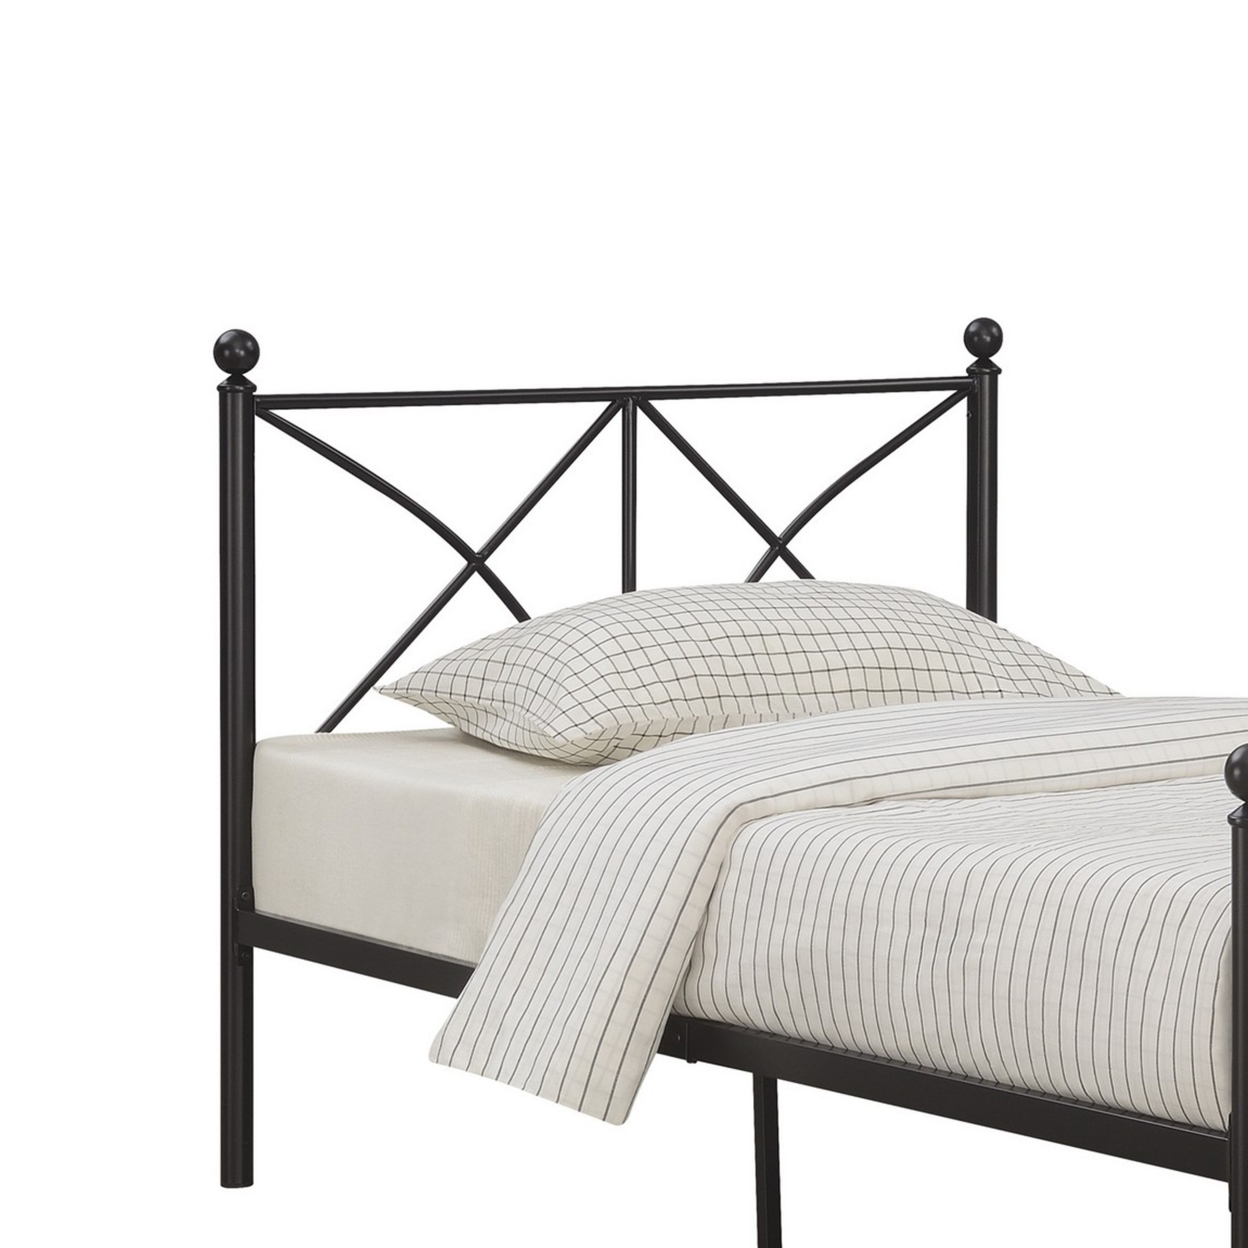 Adam 79 Inch Metal Full Size Bed Frame, Crossed Bars, Matte Black